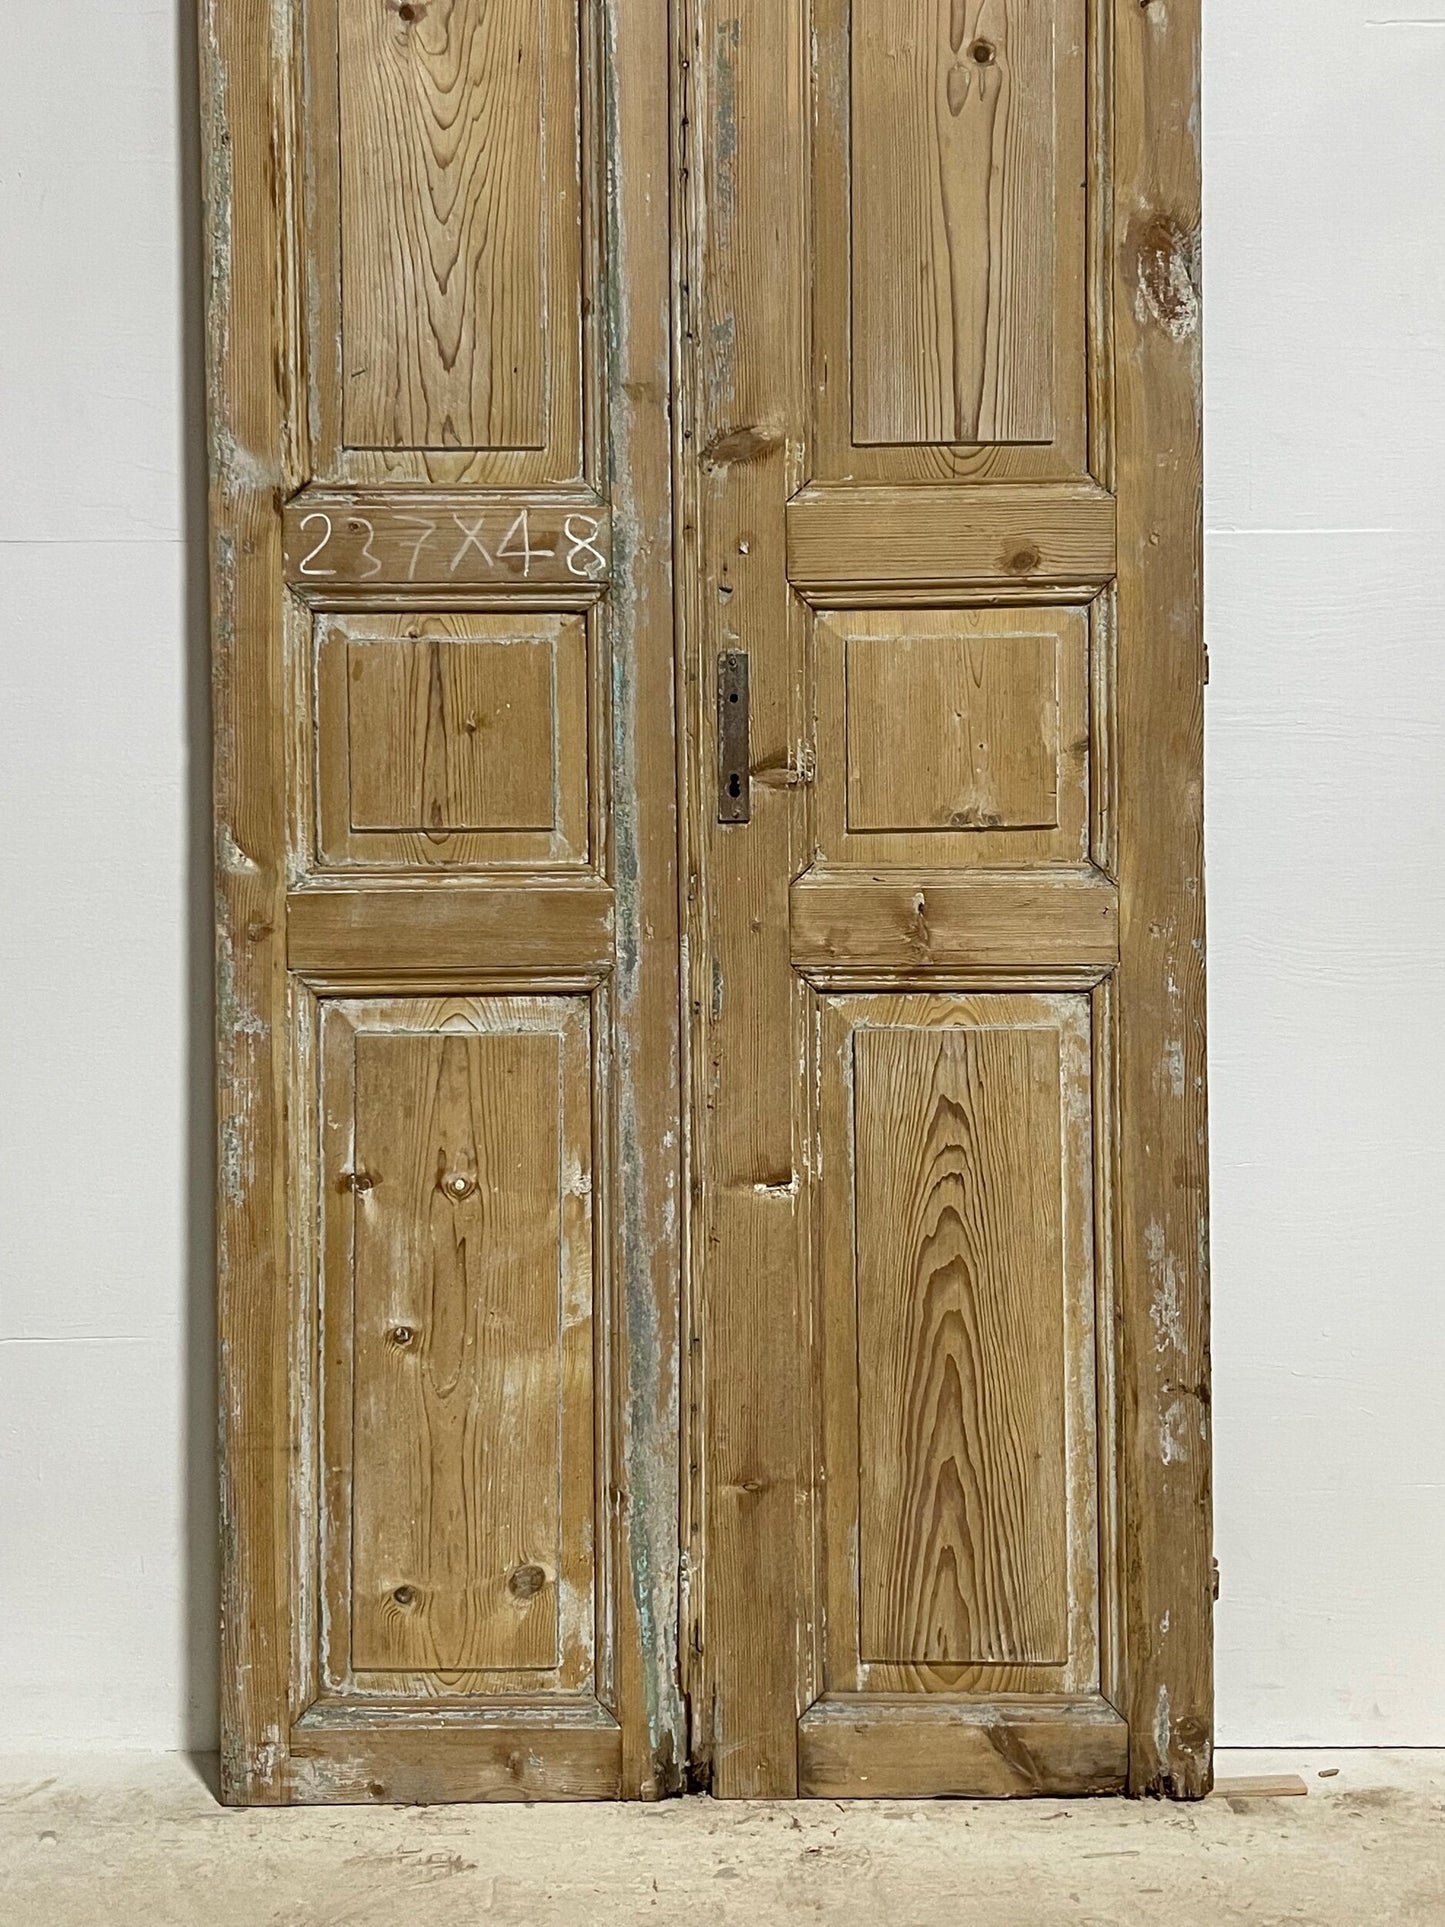 Antique French doors (93x37.25) H0165s